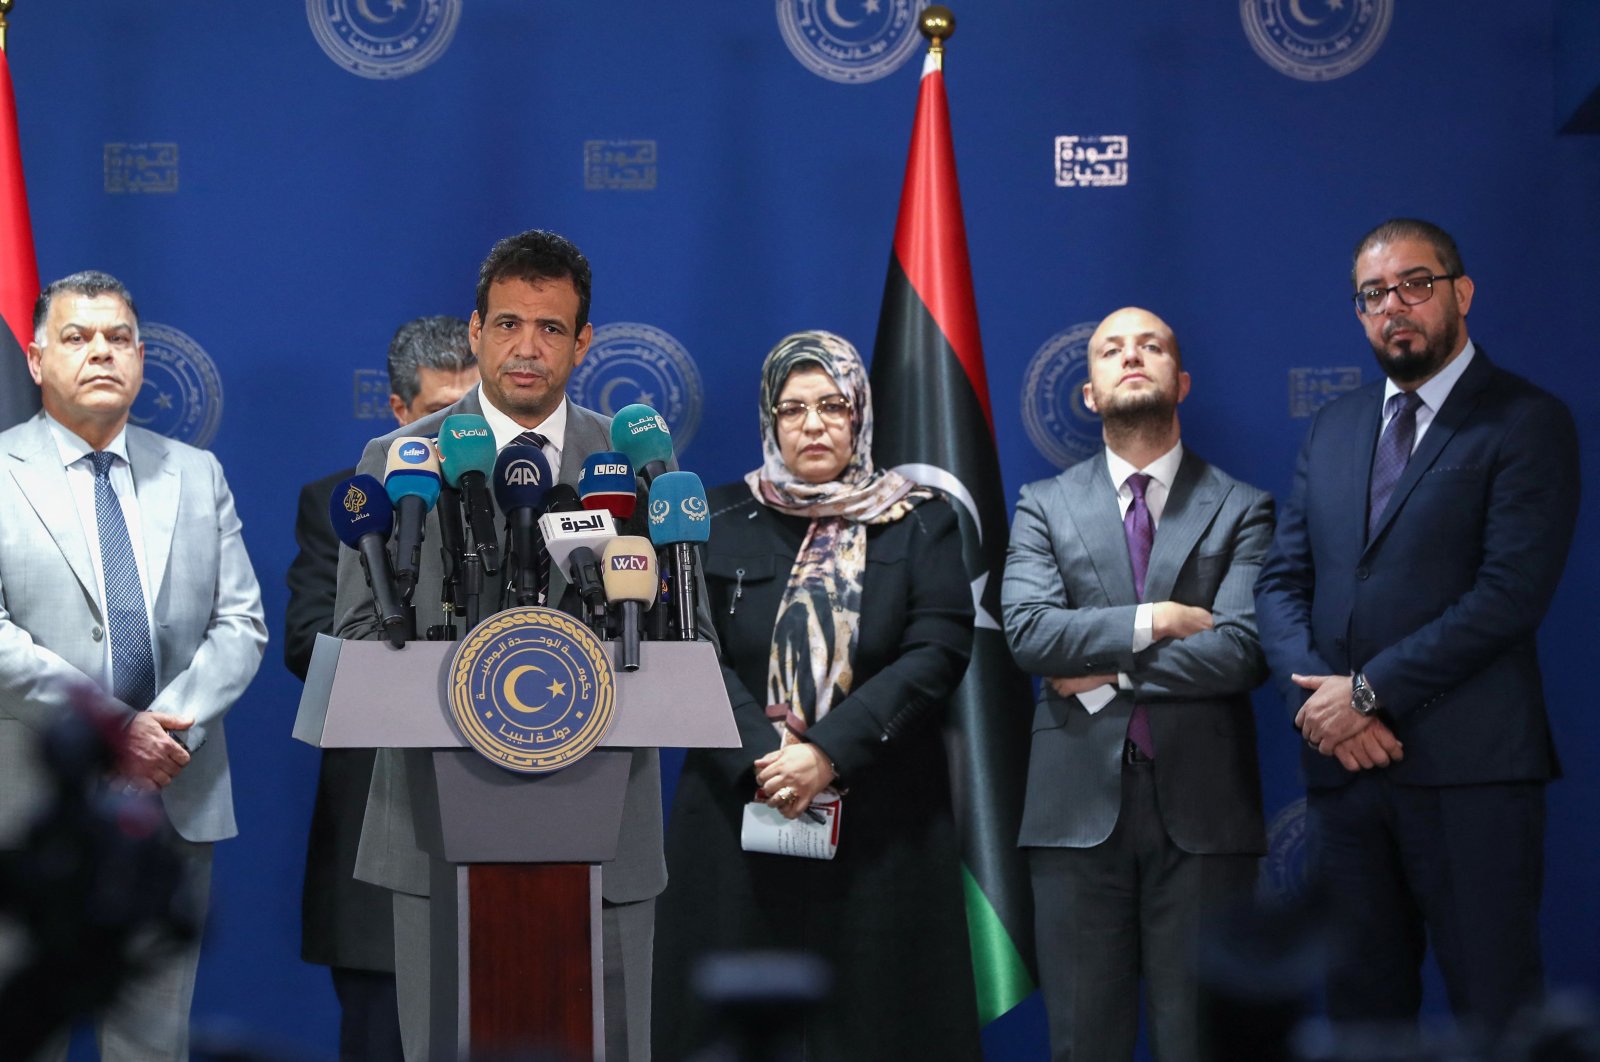 Libya siap mengadakan pemilihan presiden, kata pemerintah